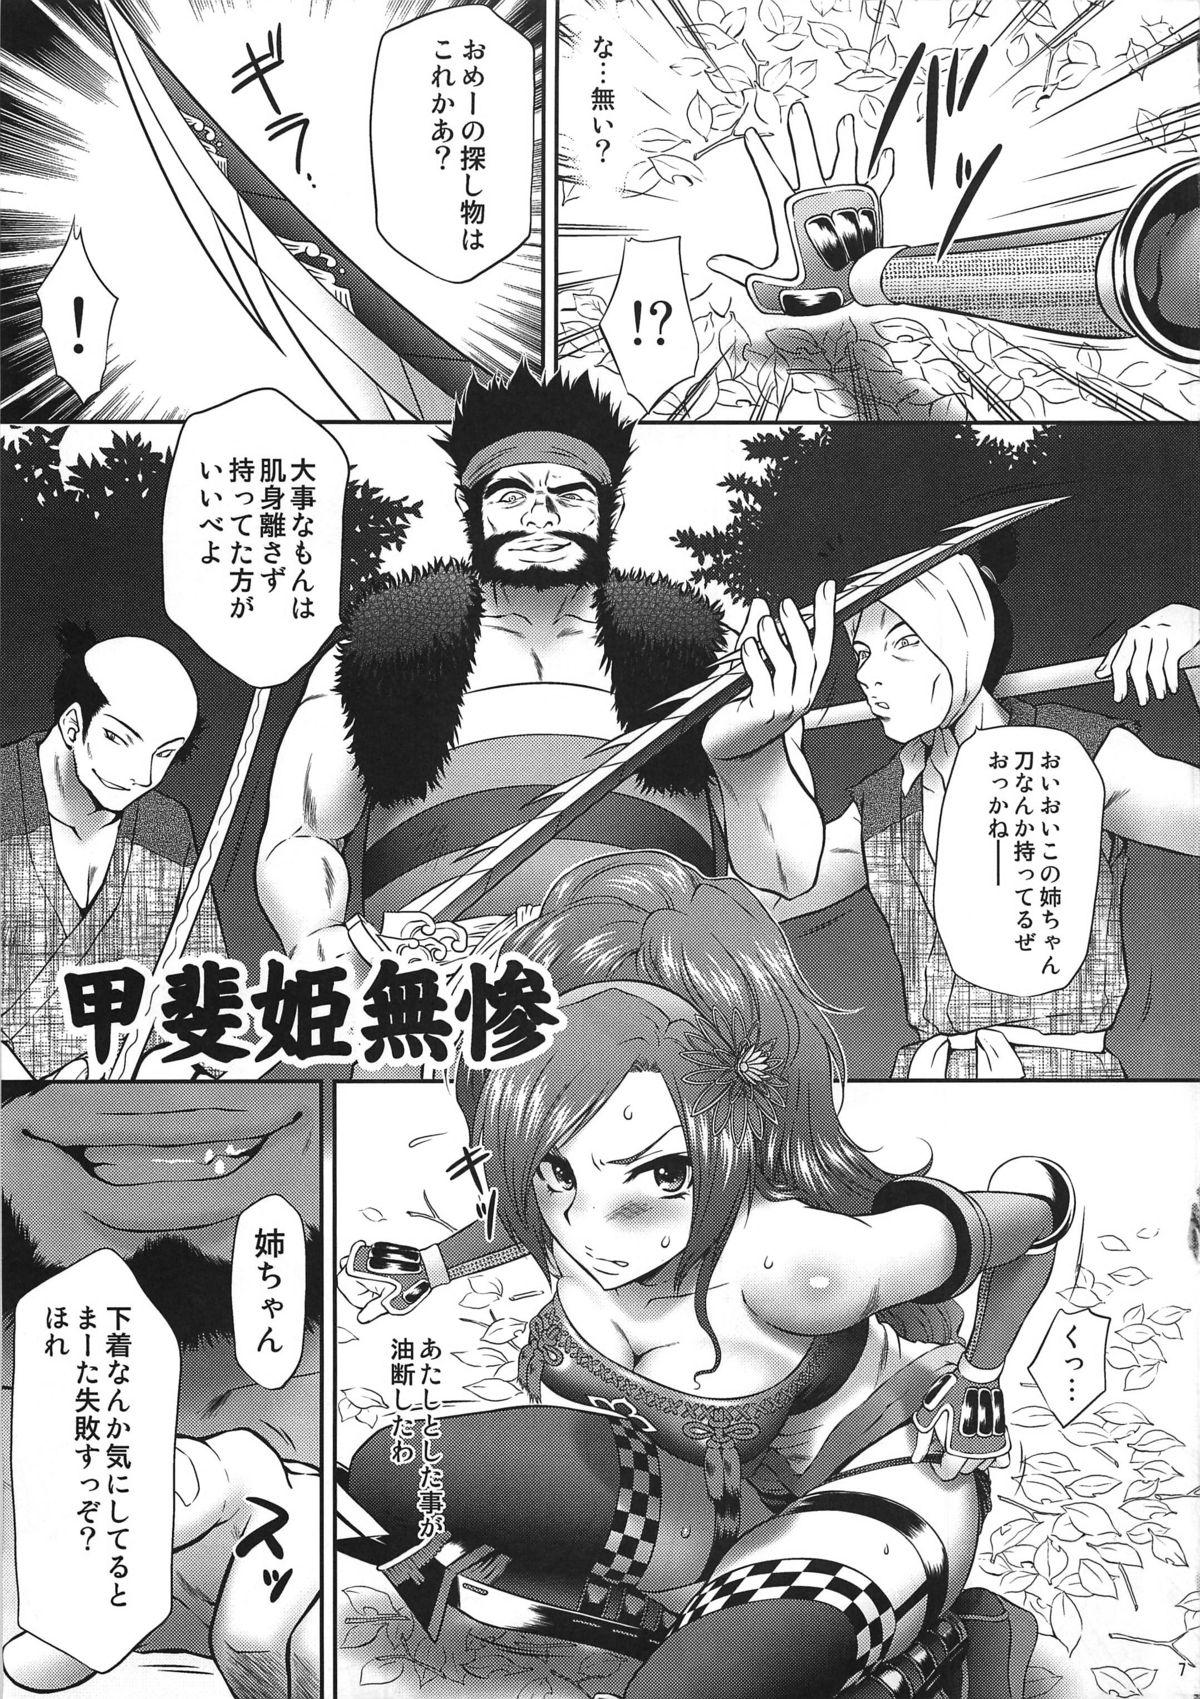 Gostosa Kaihime Muzan - Samurai warriors Jocks - Page 6